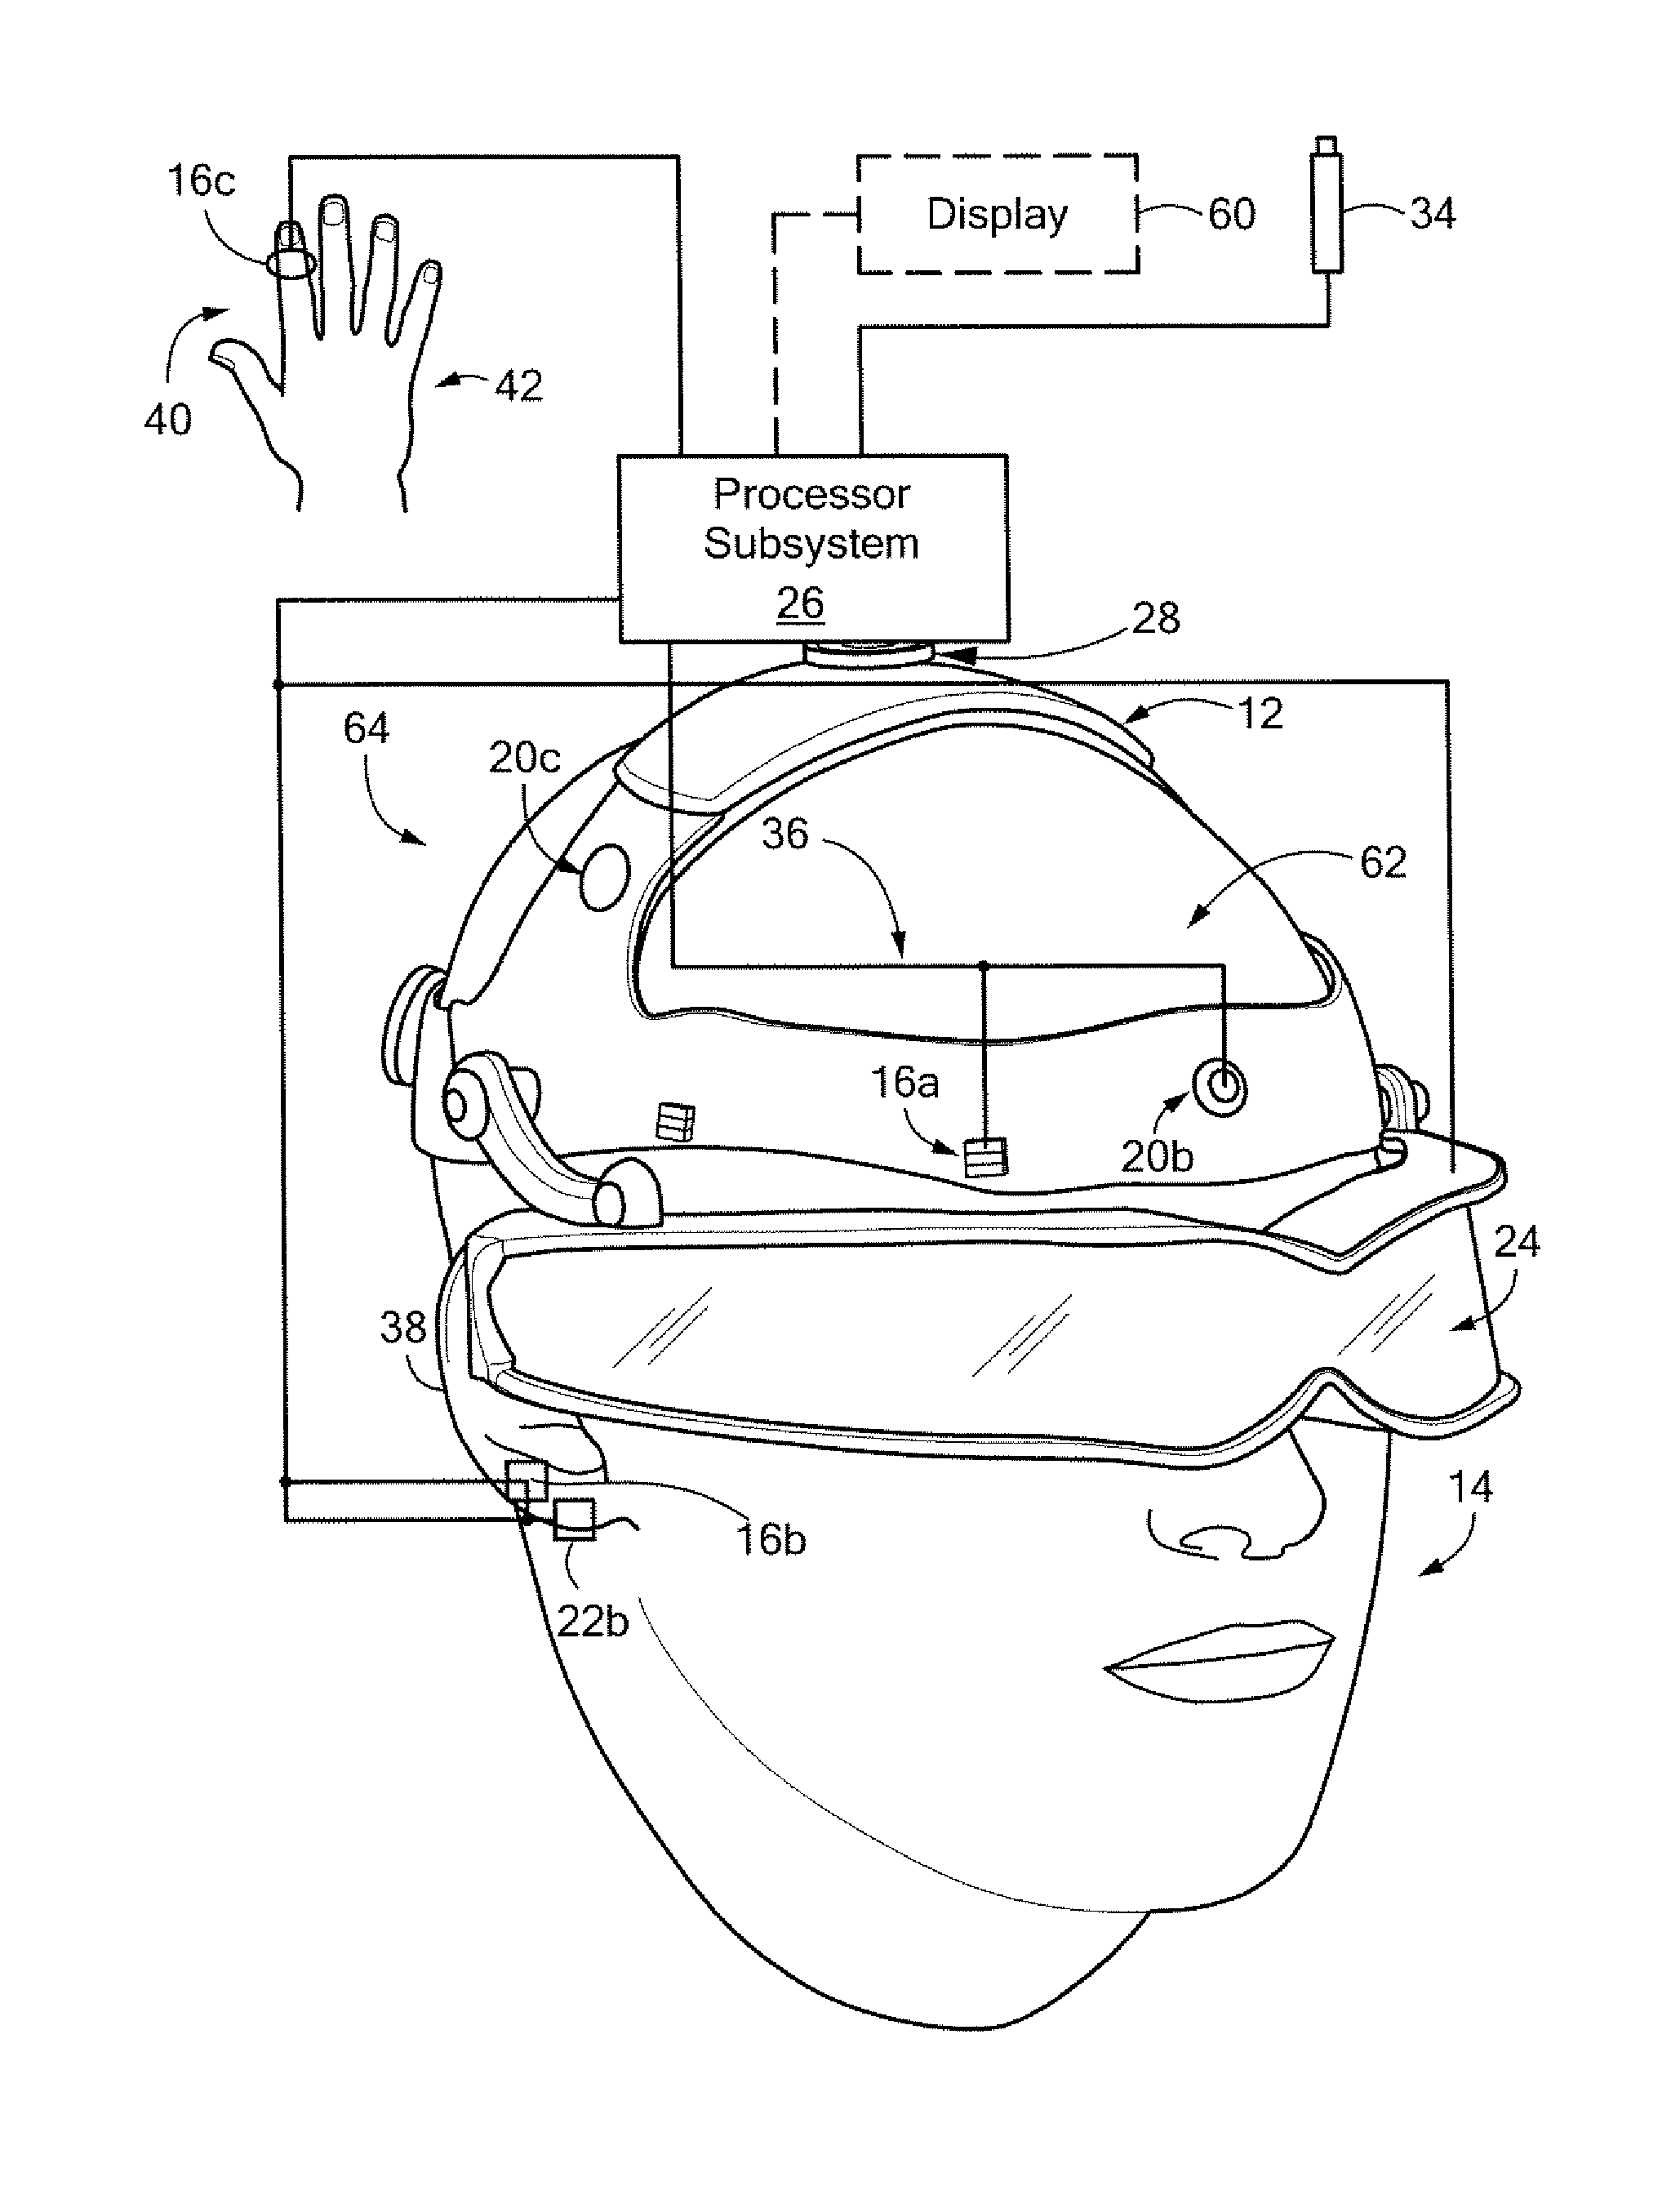 Head-mounted neurological assessment system